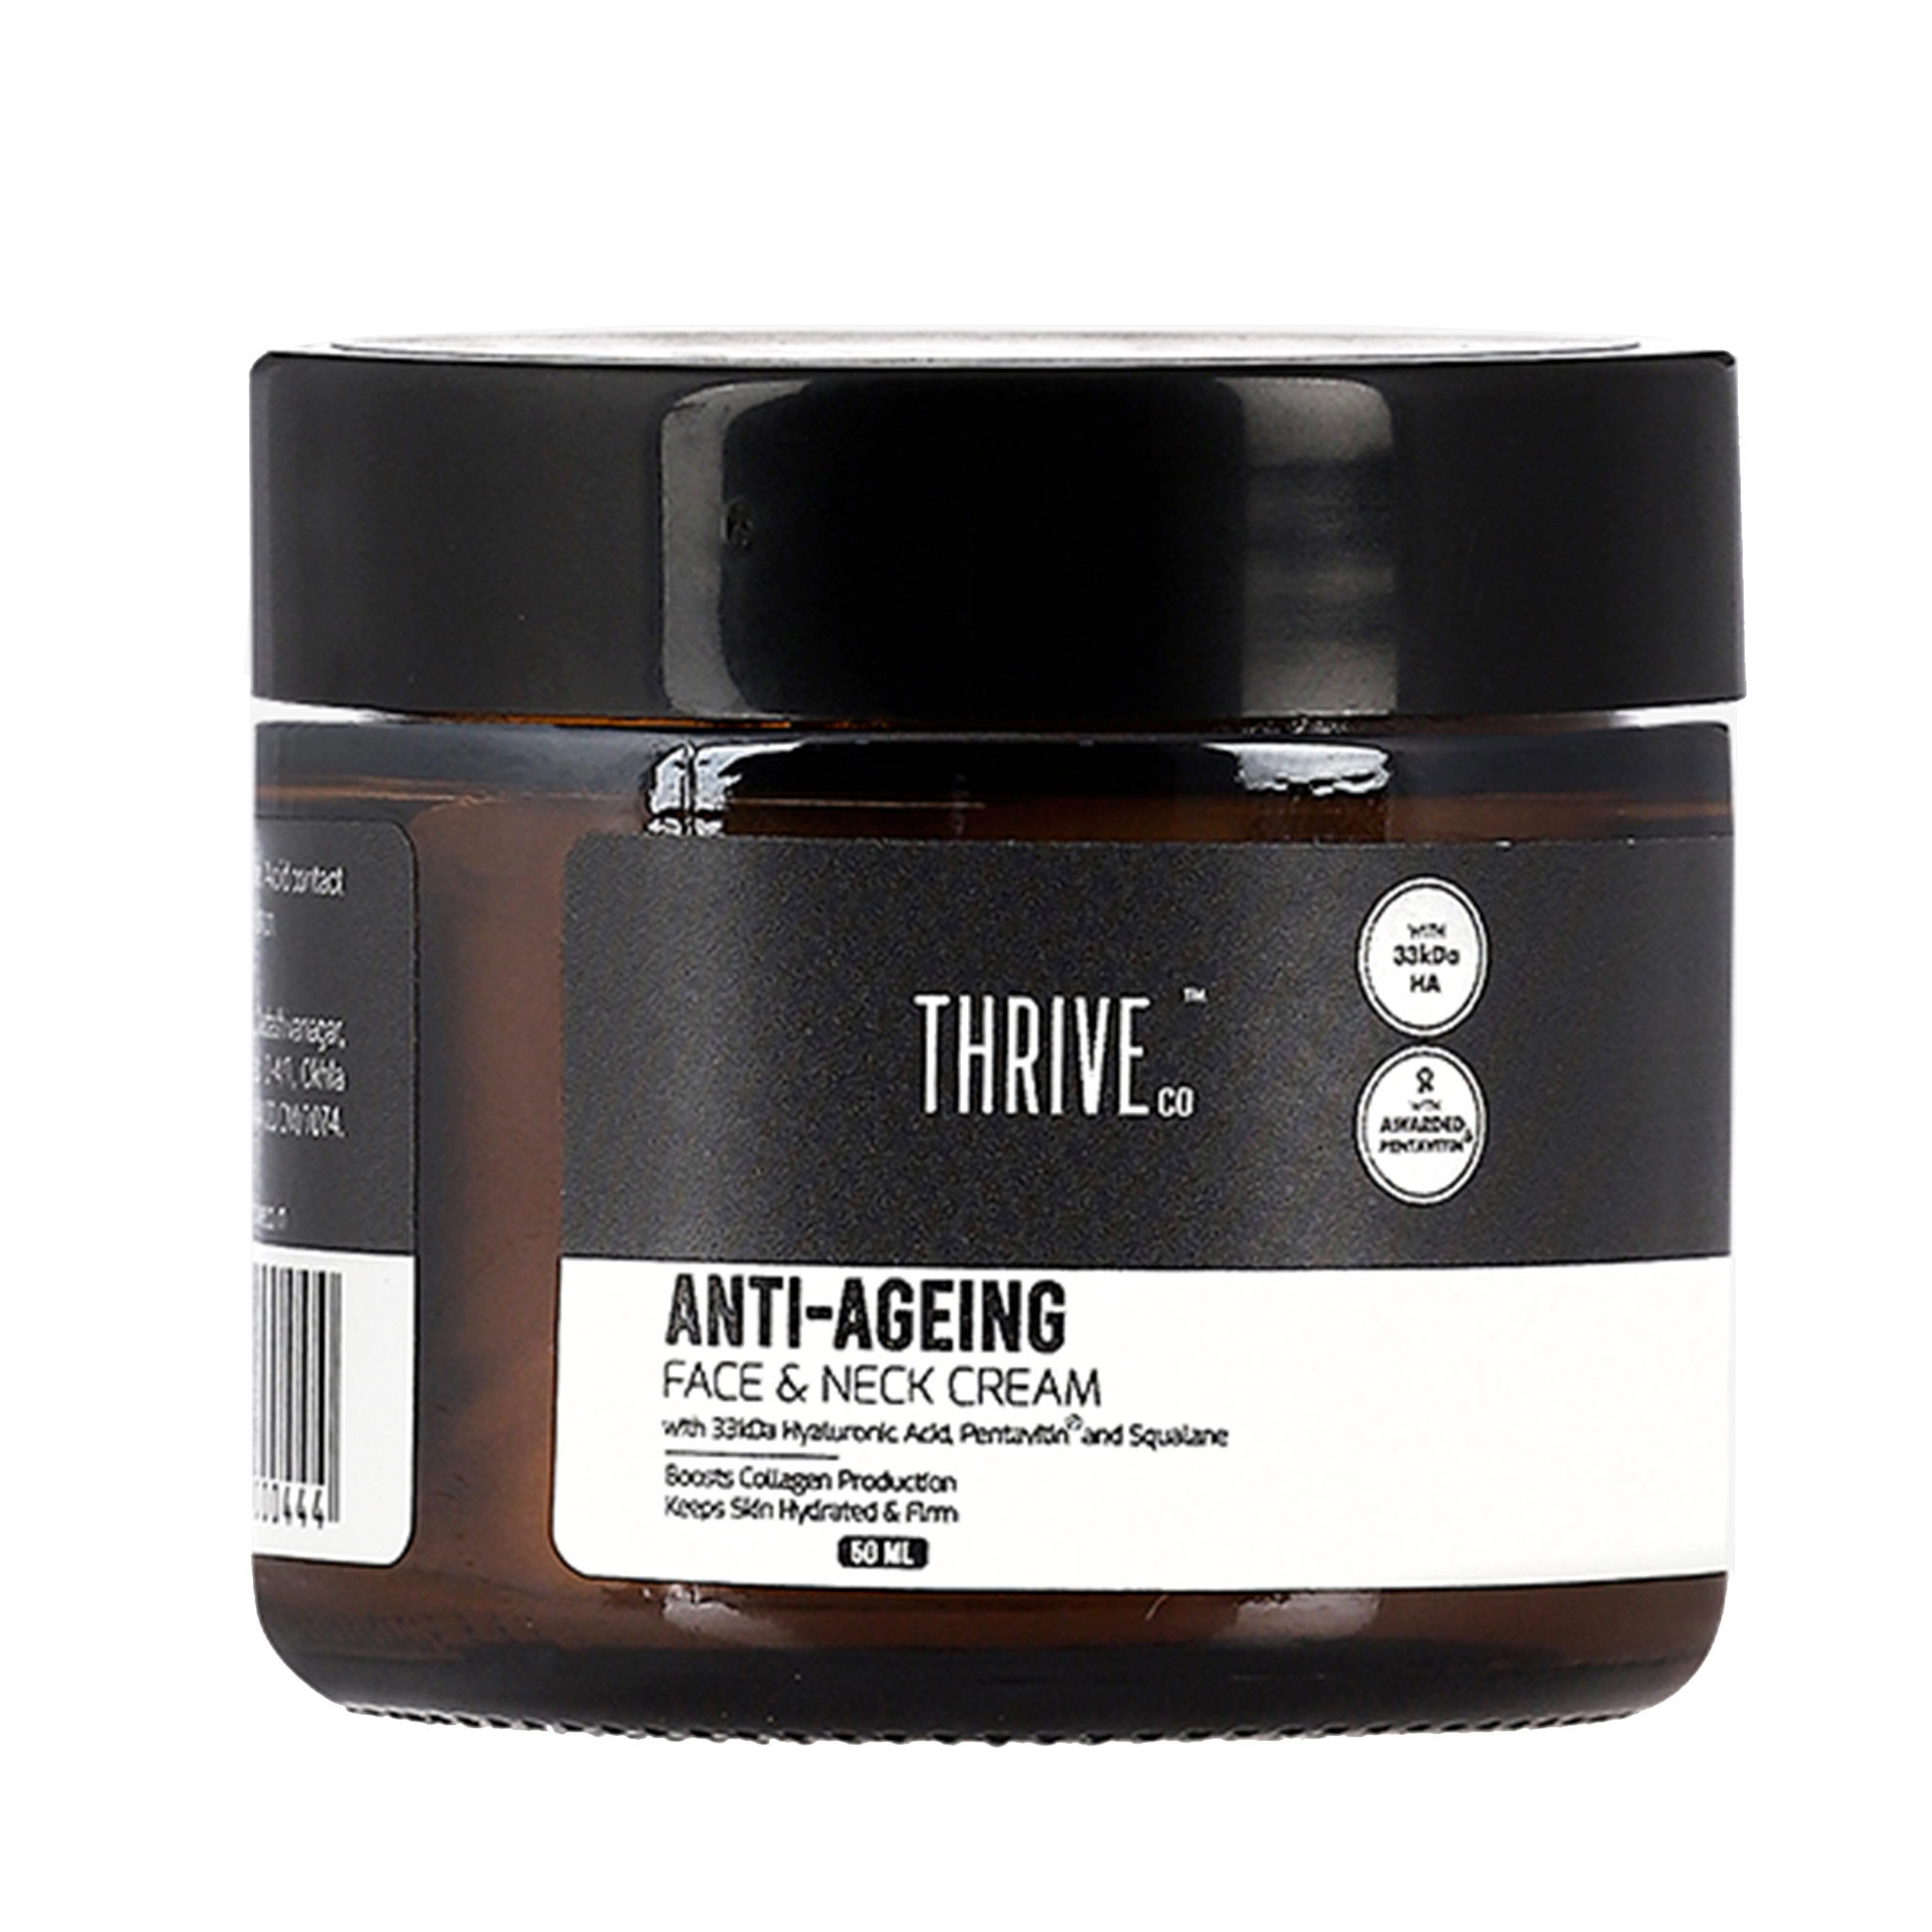 ThriveCo Anti-Ageing Face & Neck Cream